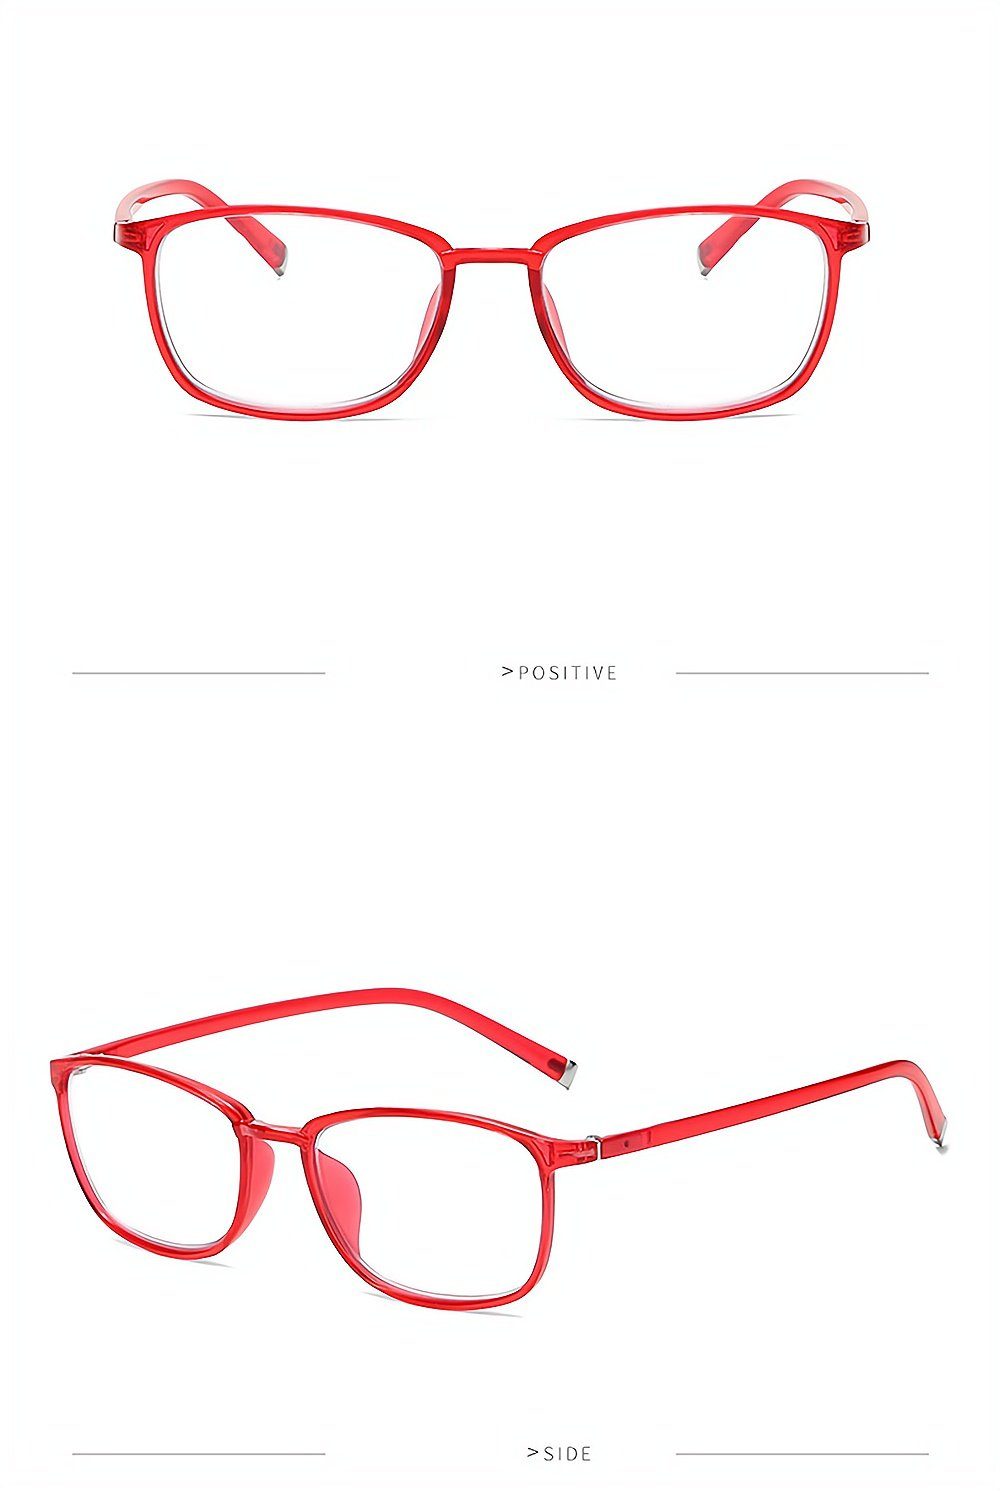 Mode bedruckte blaue Gläser Lesebrille rot Rahmen PACIEA anti presbyopische